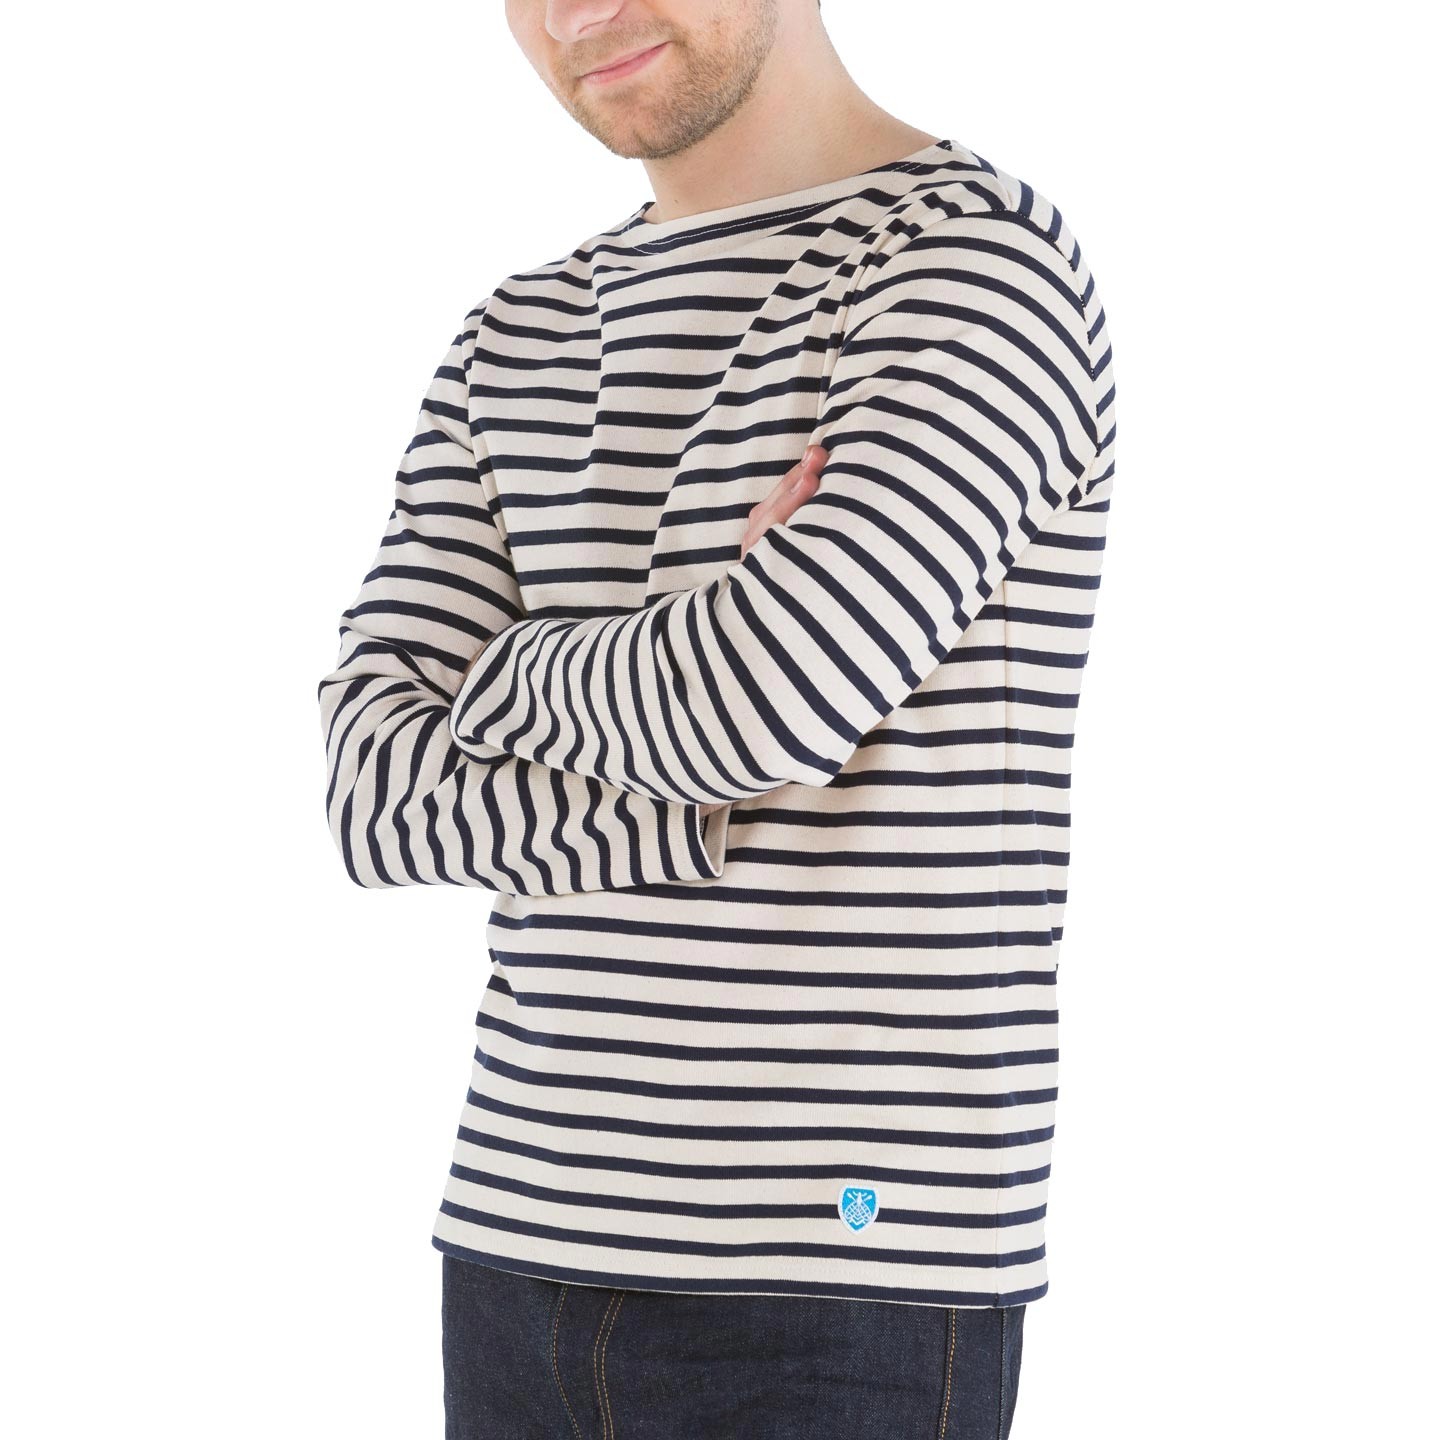 Ecru / marine striped breton shirt made in France mariniere